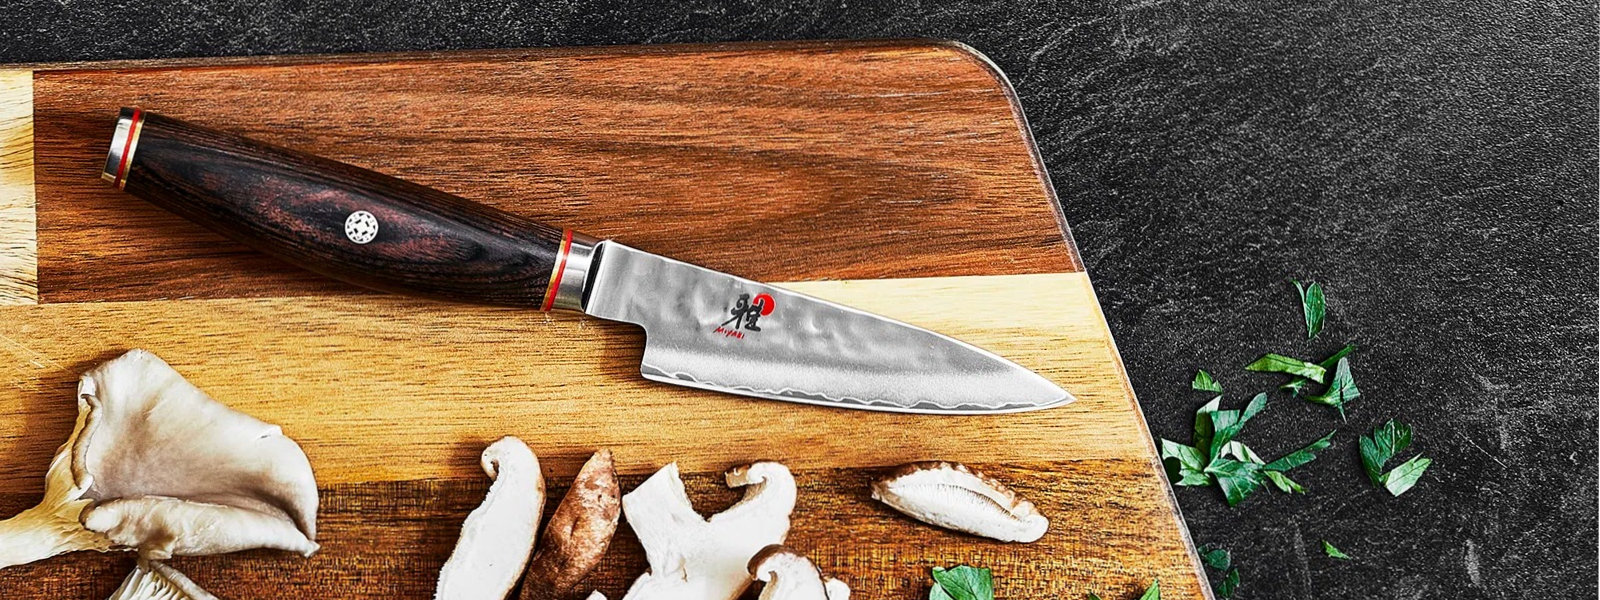 Miyabi sharpener diamond / ceramic - Buy Knives and Knife